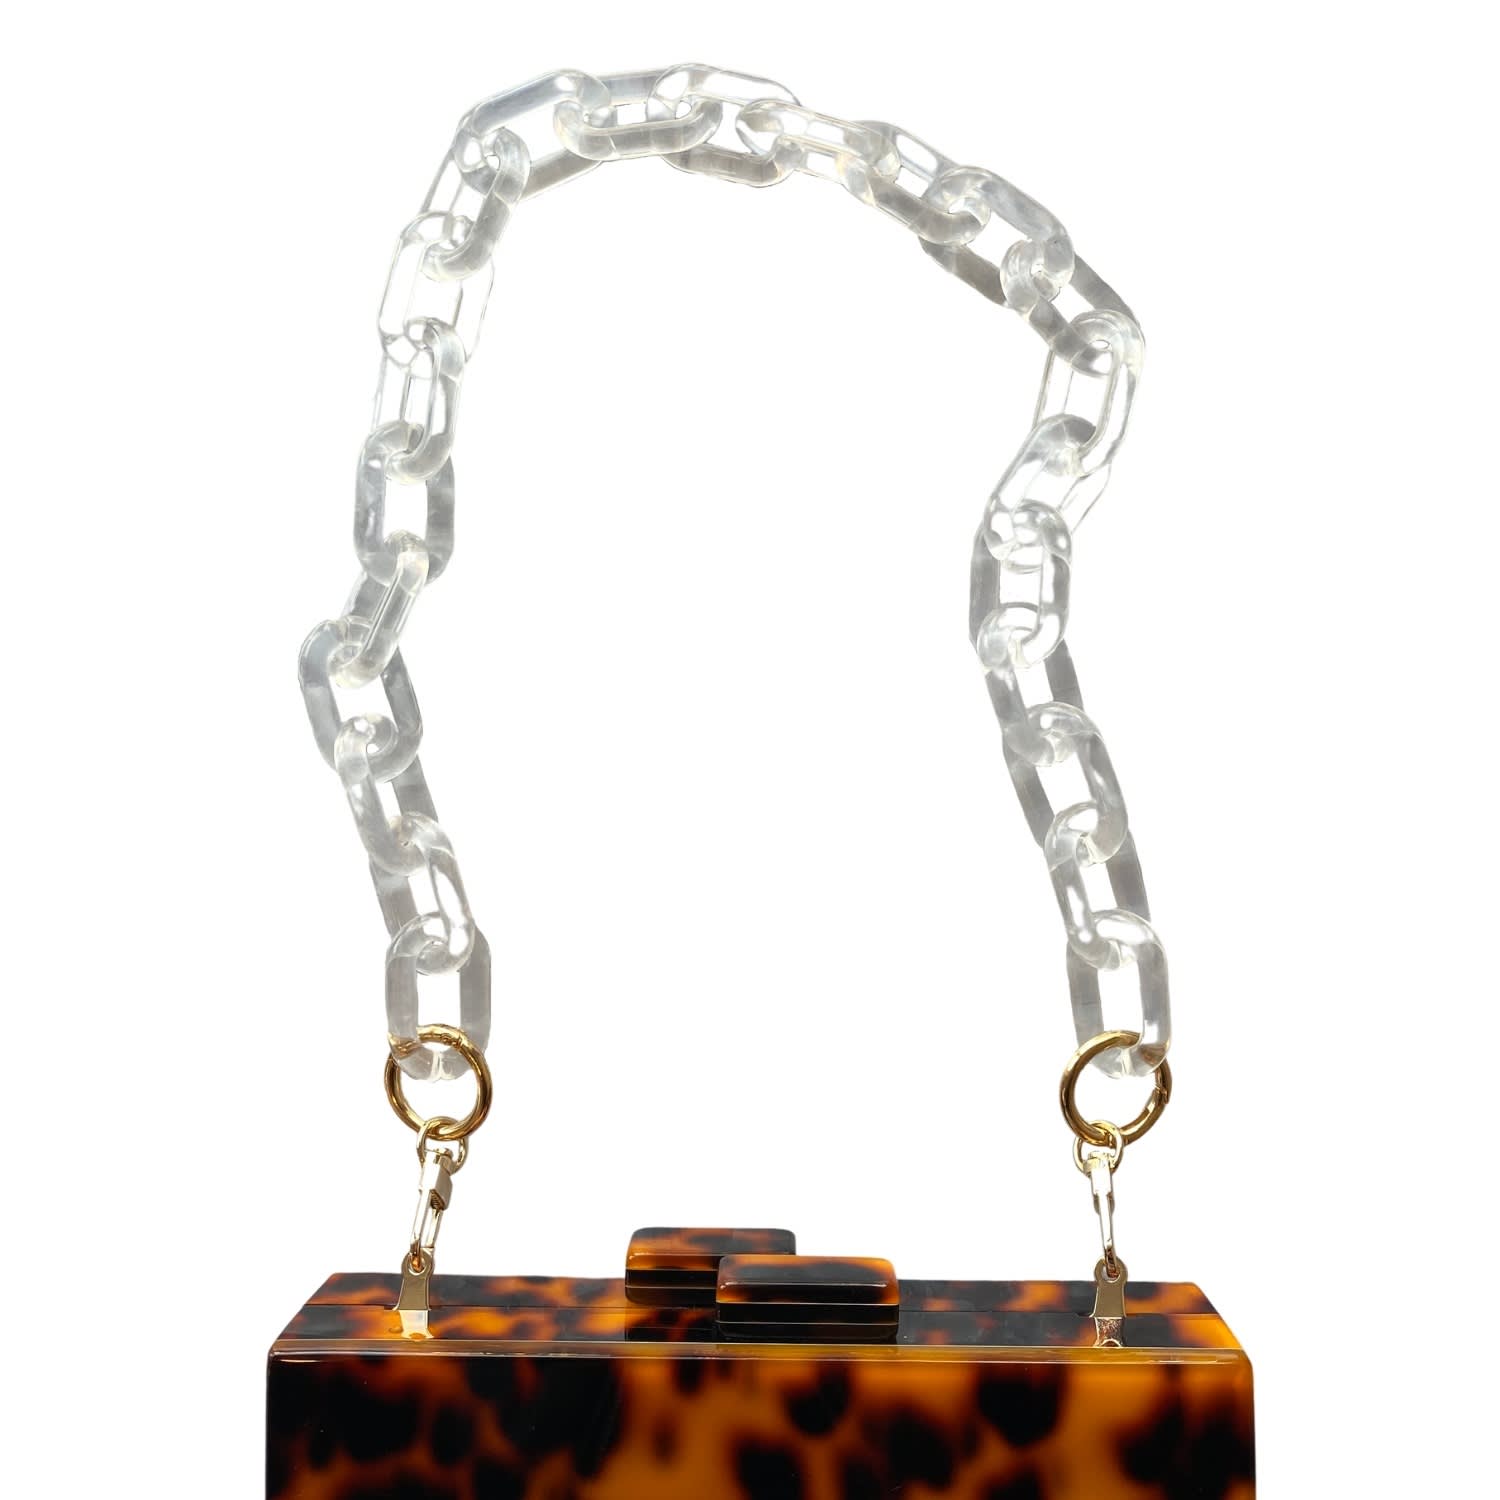 Mini Box Bag Orange Fashionable Chain Strap, Clear Bag